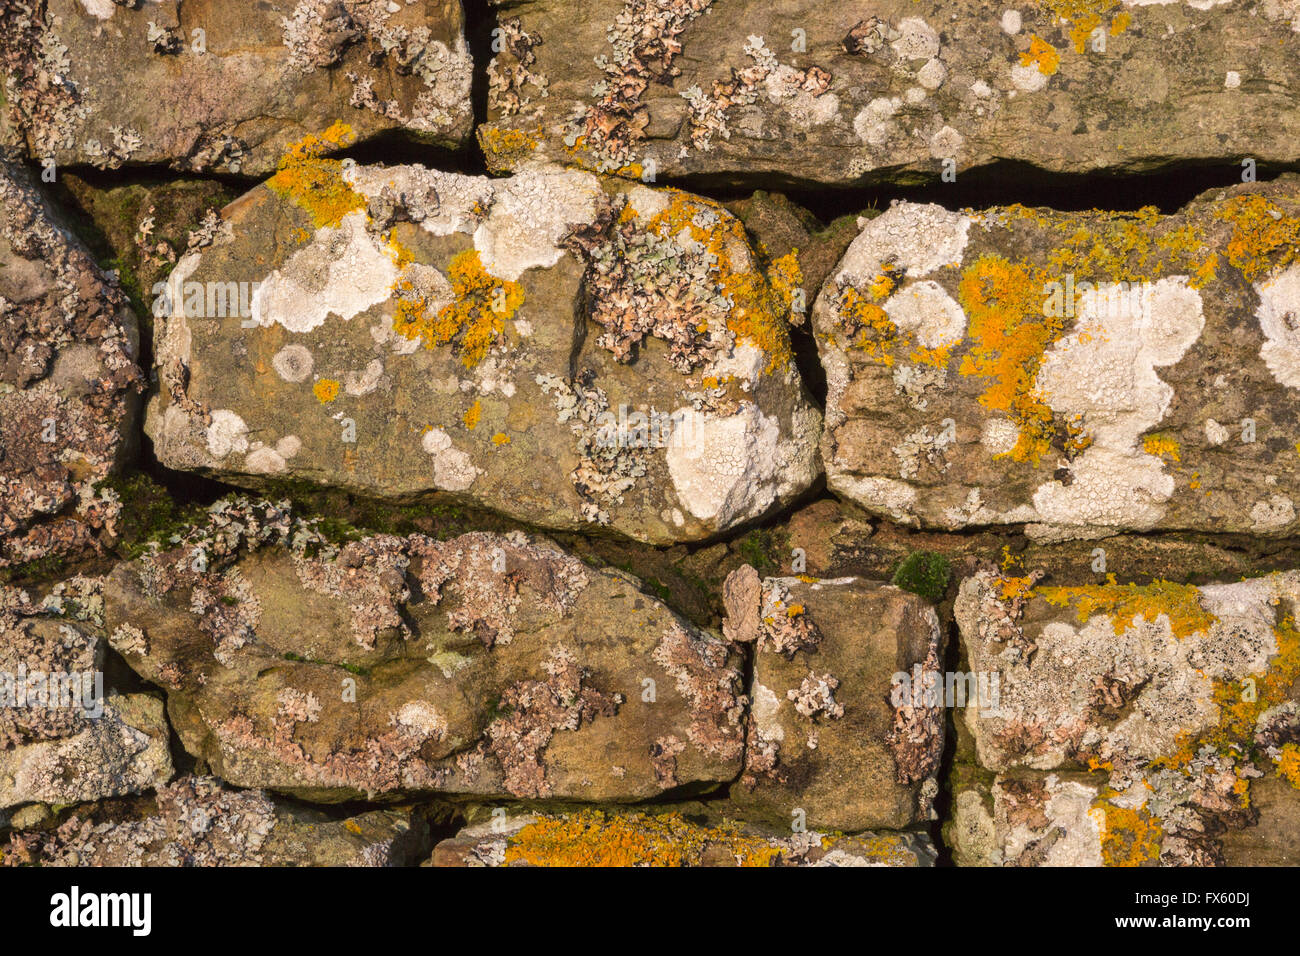 https://c8.alamy.com/comp/FX60DJ/lichen-on-stone-wall-kielder-northumberland-uk-FX60DJ.jpg